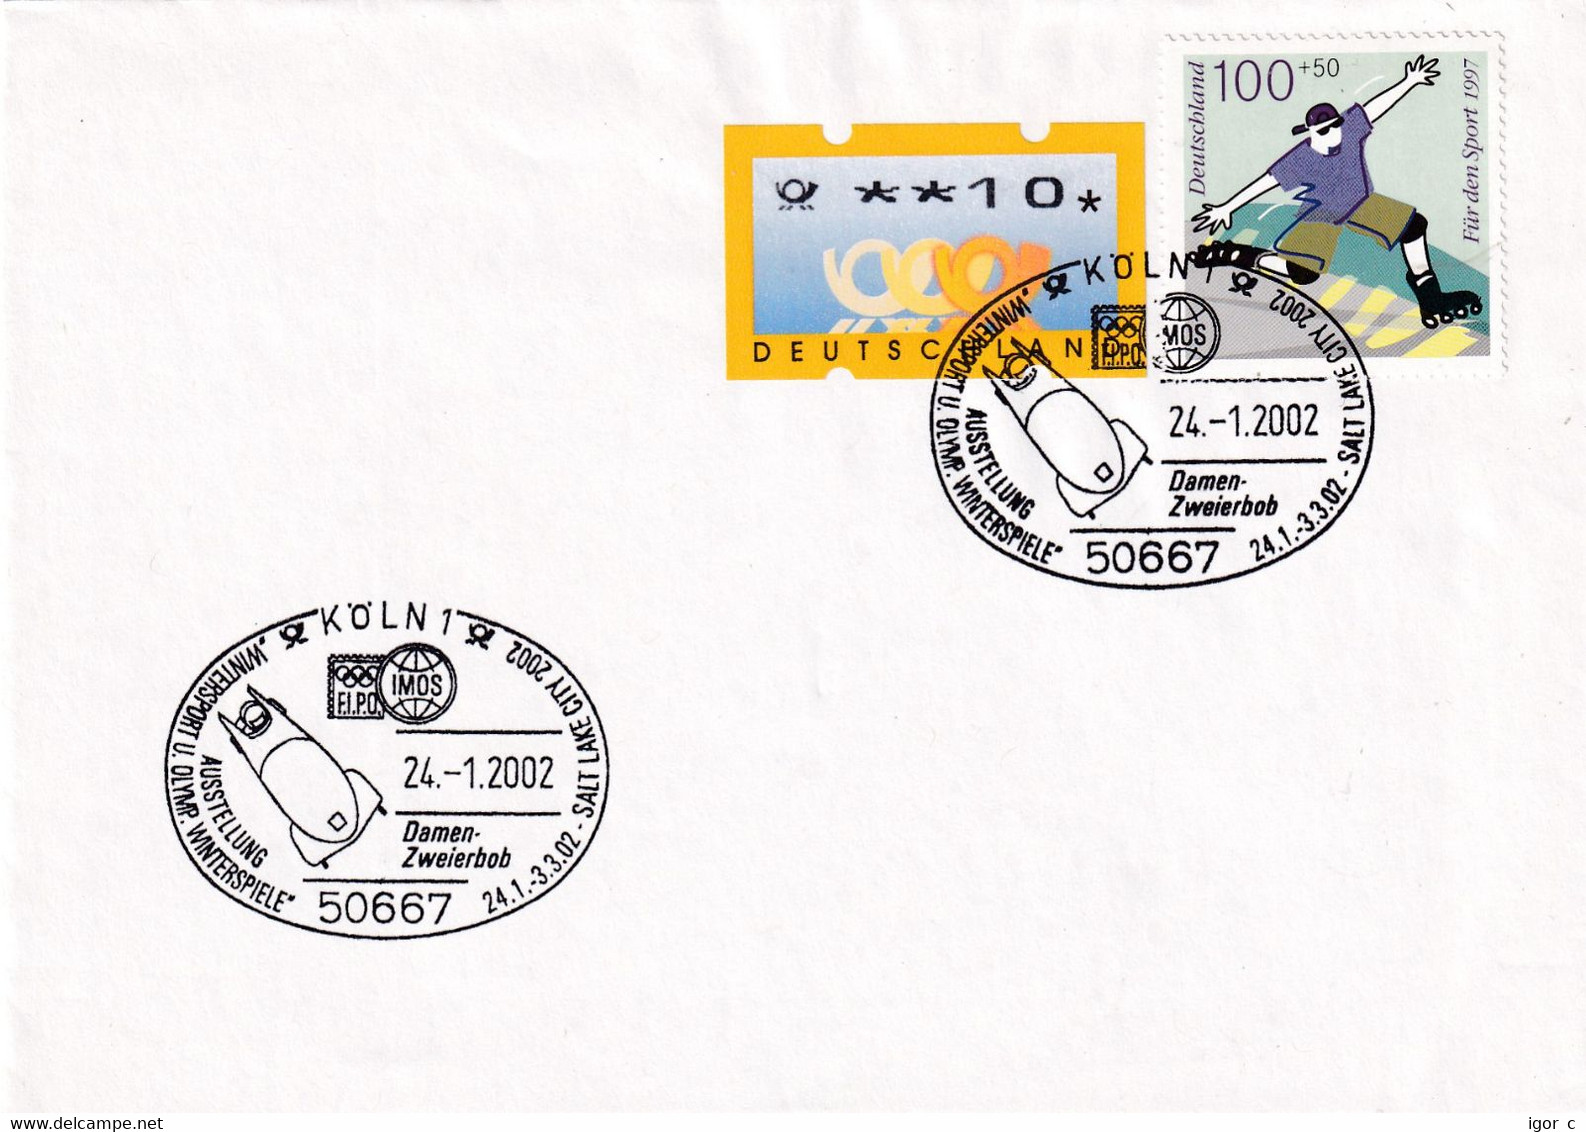 Germany 2002 Cover: Roller Skating Stamp; Olympic Games 2002 New Discipline - Women Bobsleigh; Frama Label - Winter 2002: Salt Lake City